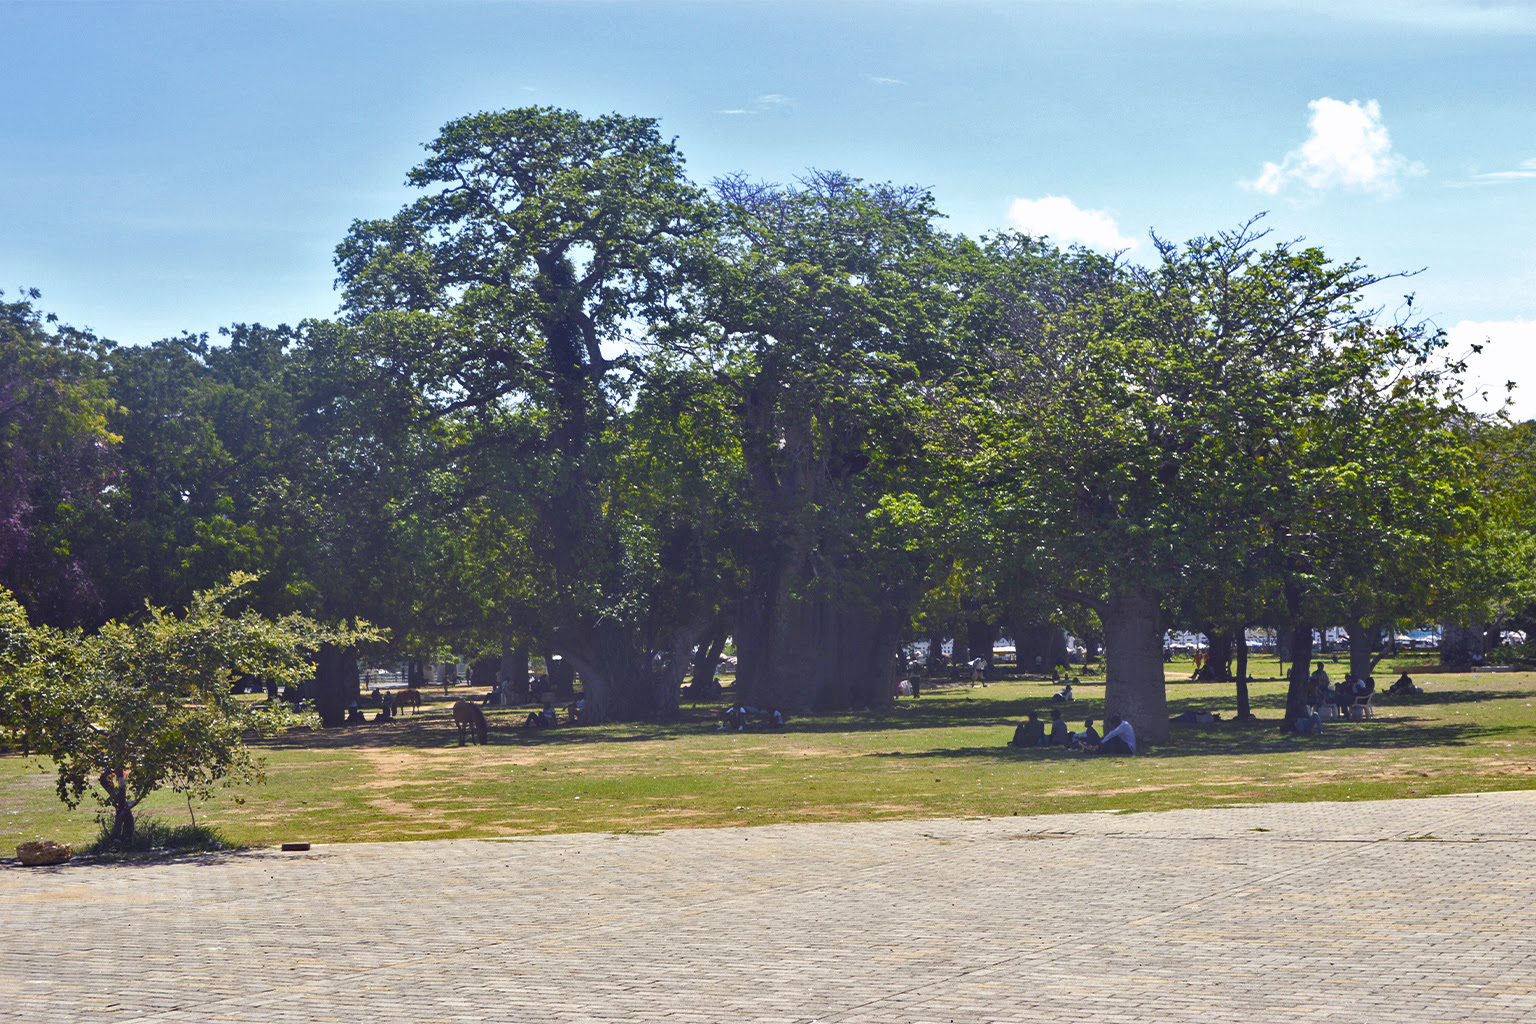 Mama Ngina Waterfront, a recreational park in Mombasa, has dozens of baobab trees that provide shade to visitors.